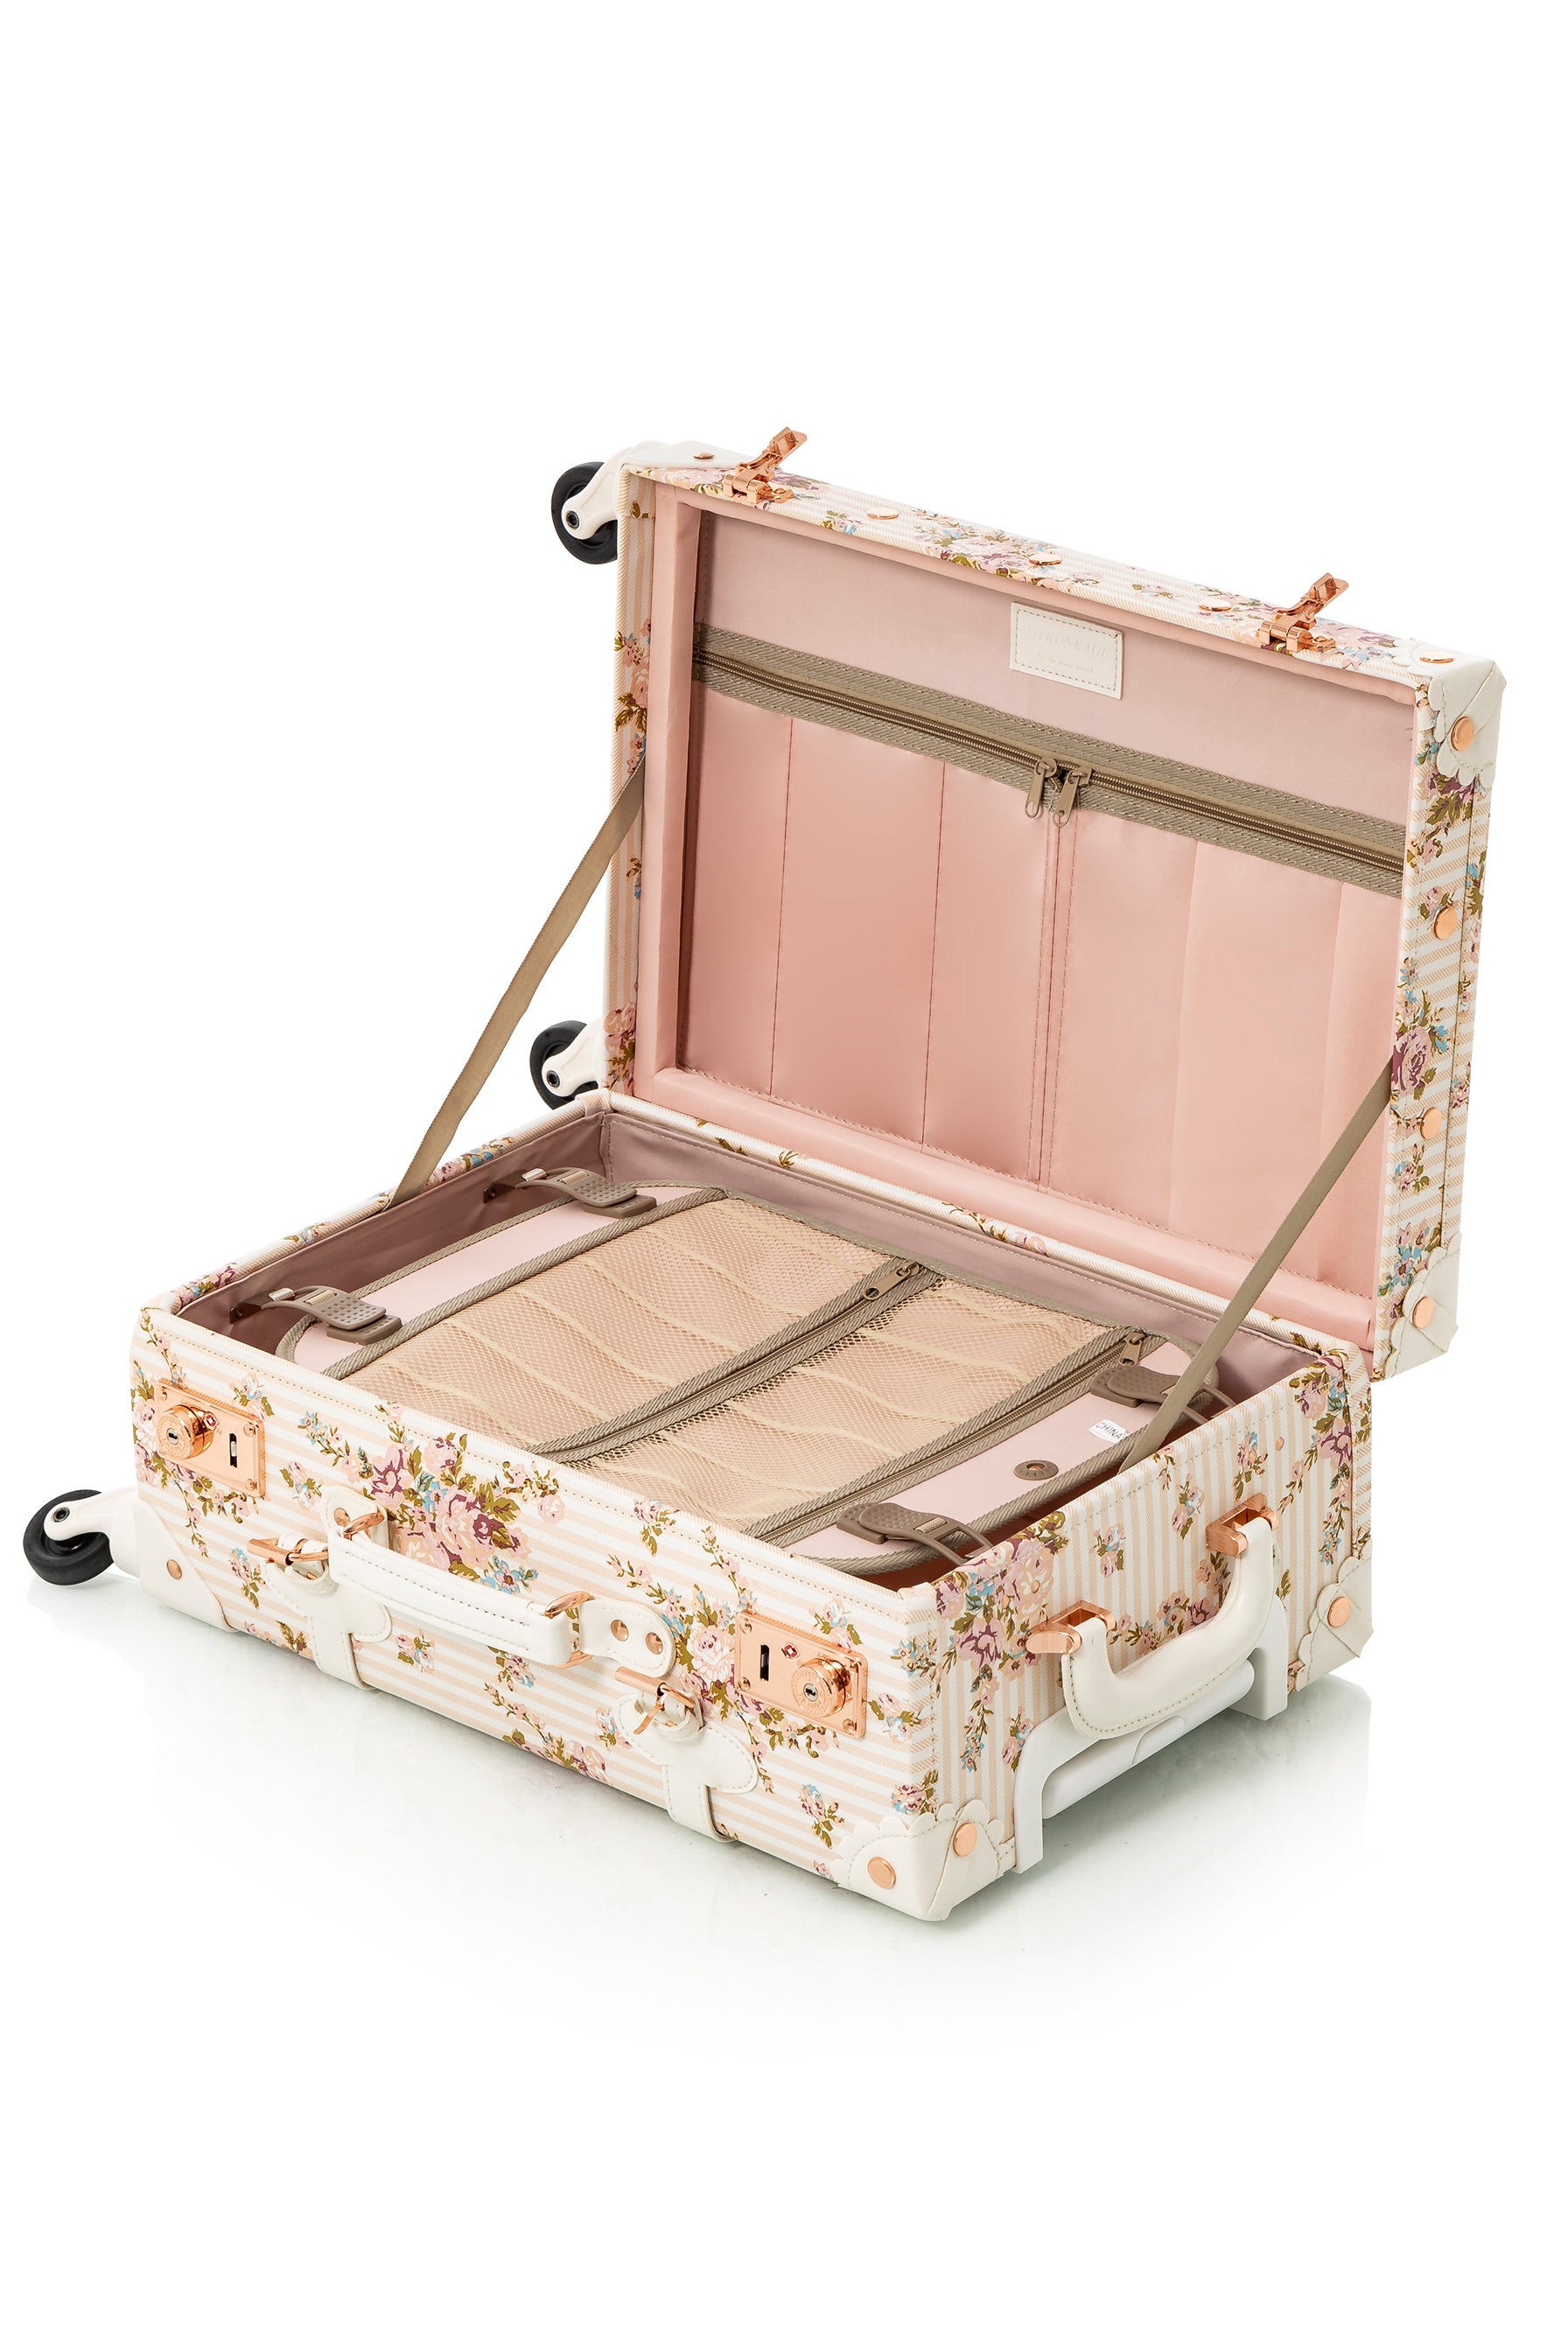 WildFloral Spinner Suitcase - Beige Floral